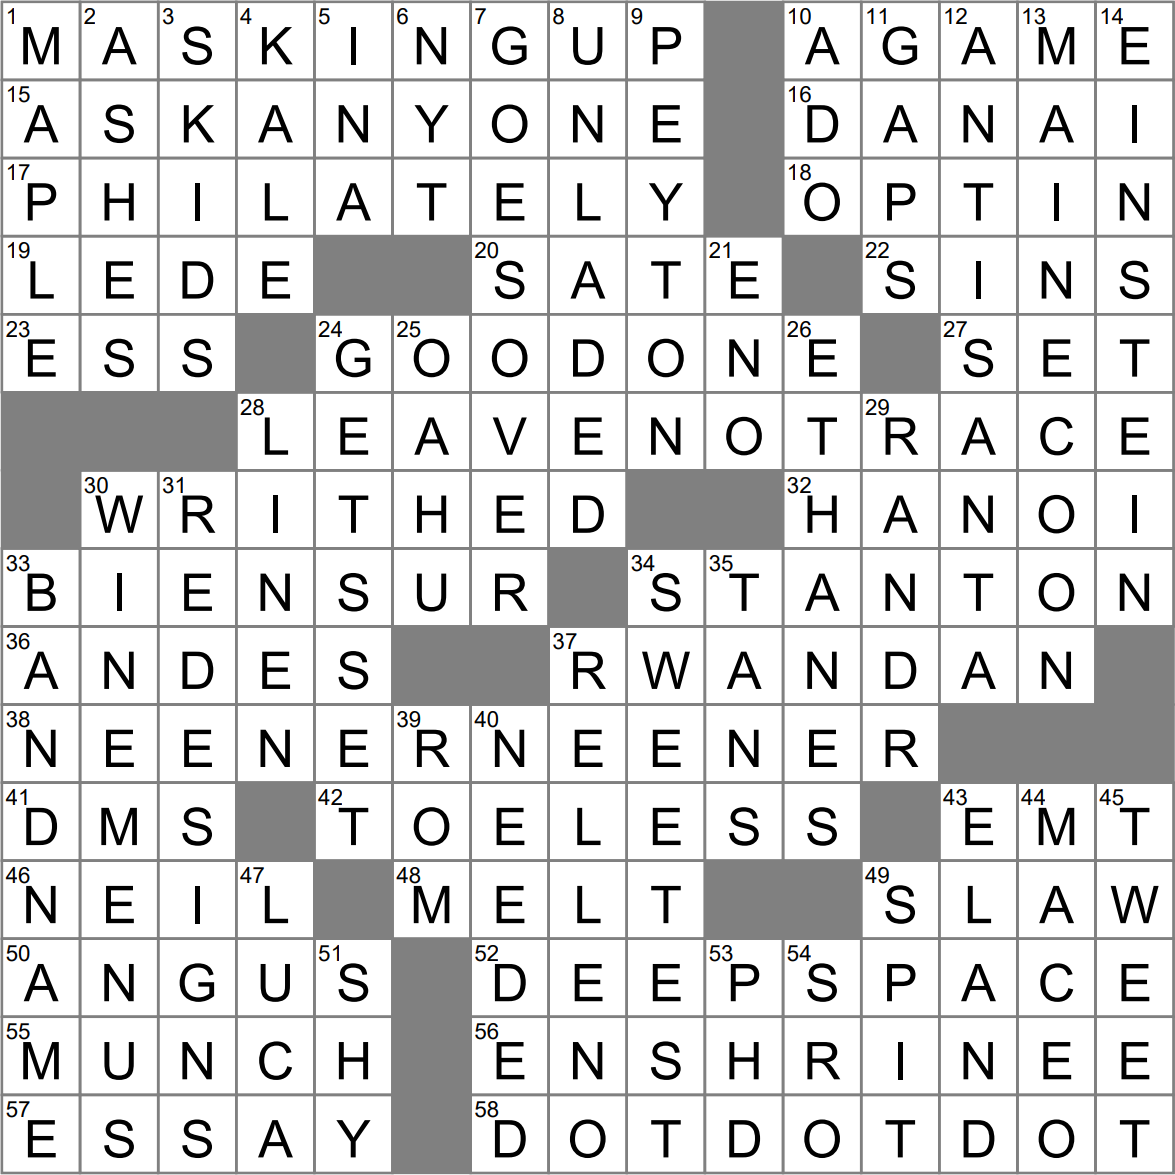 Collective noun? crossword clue Archives LAXCrossword com